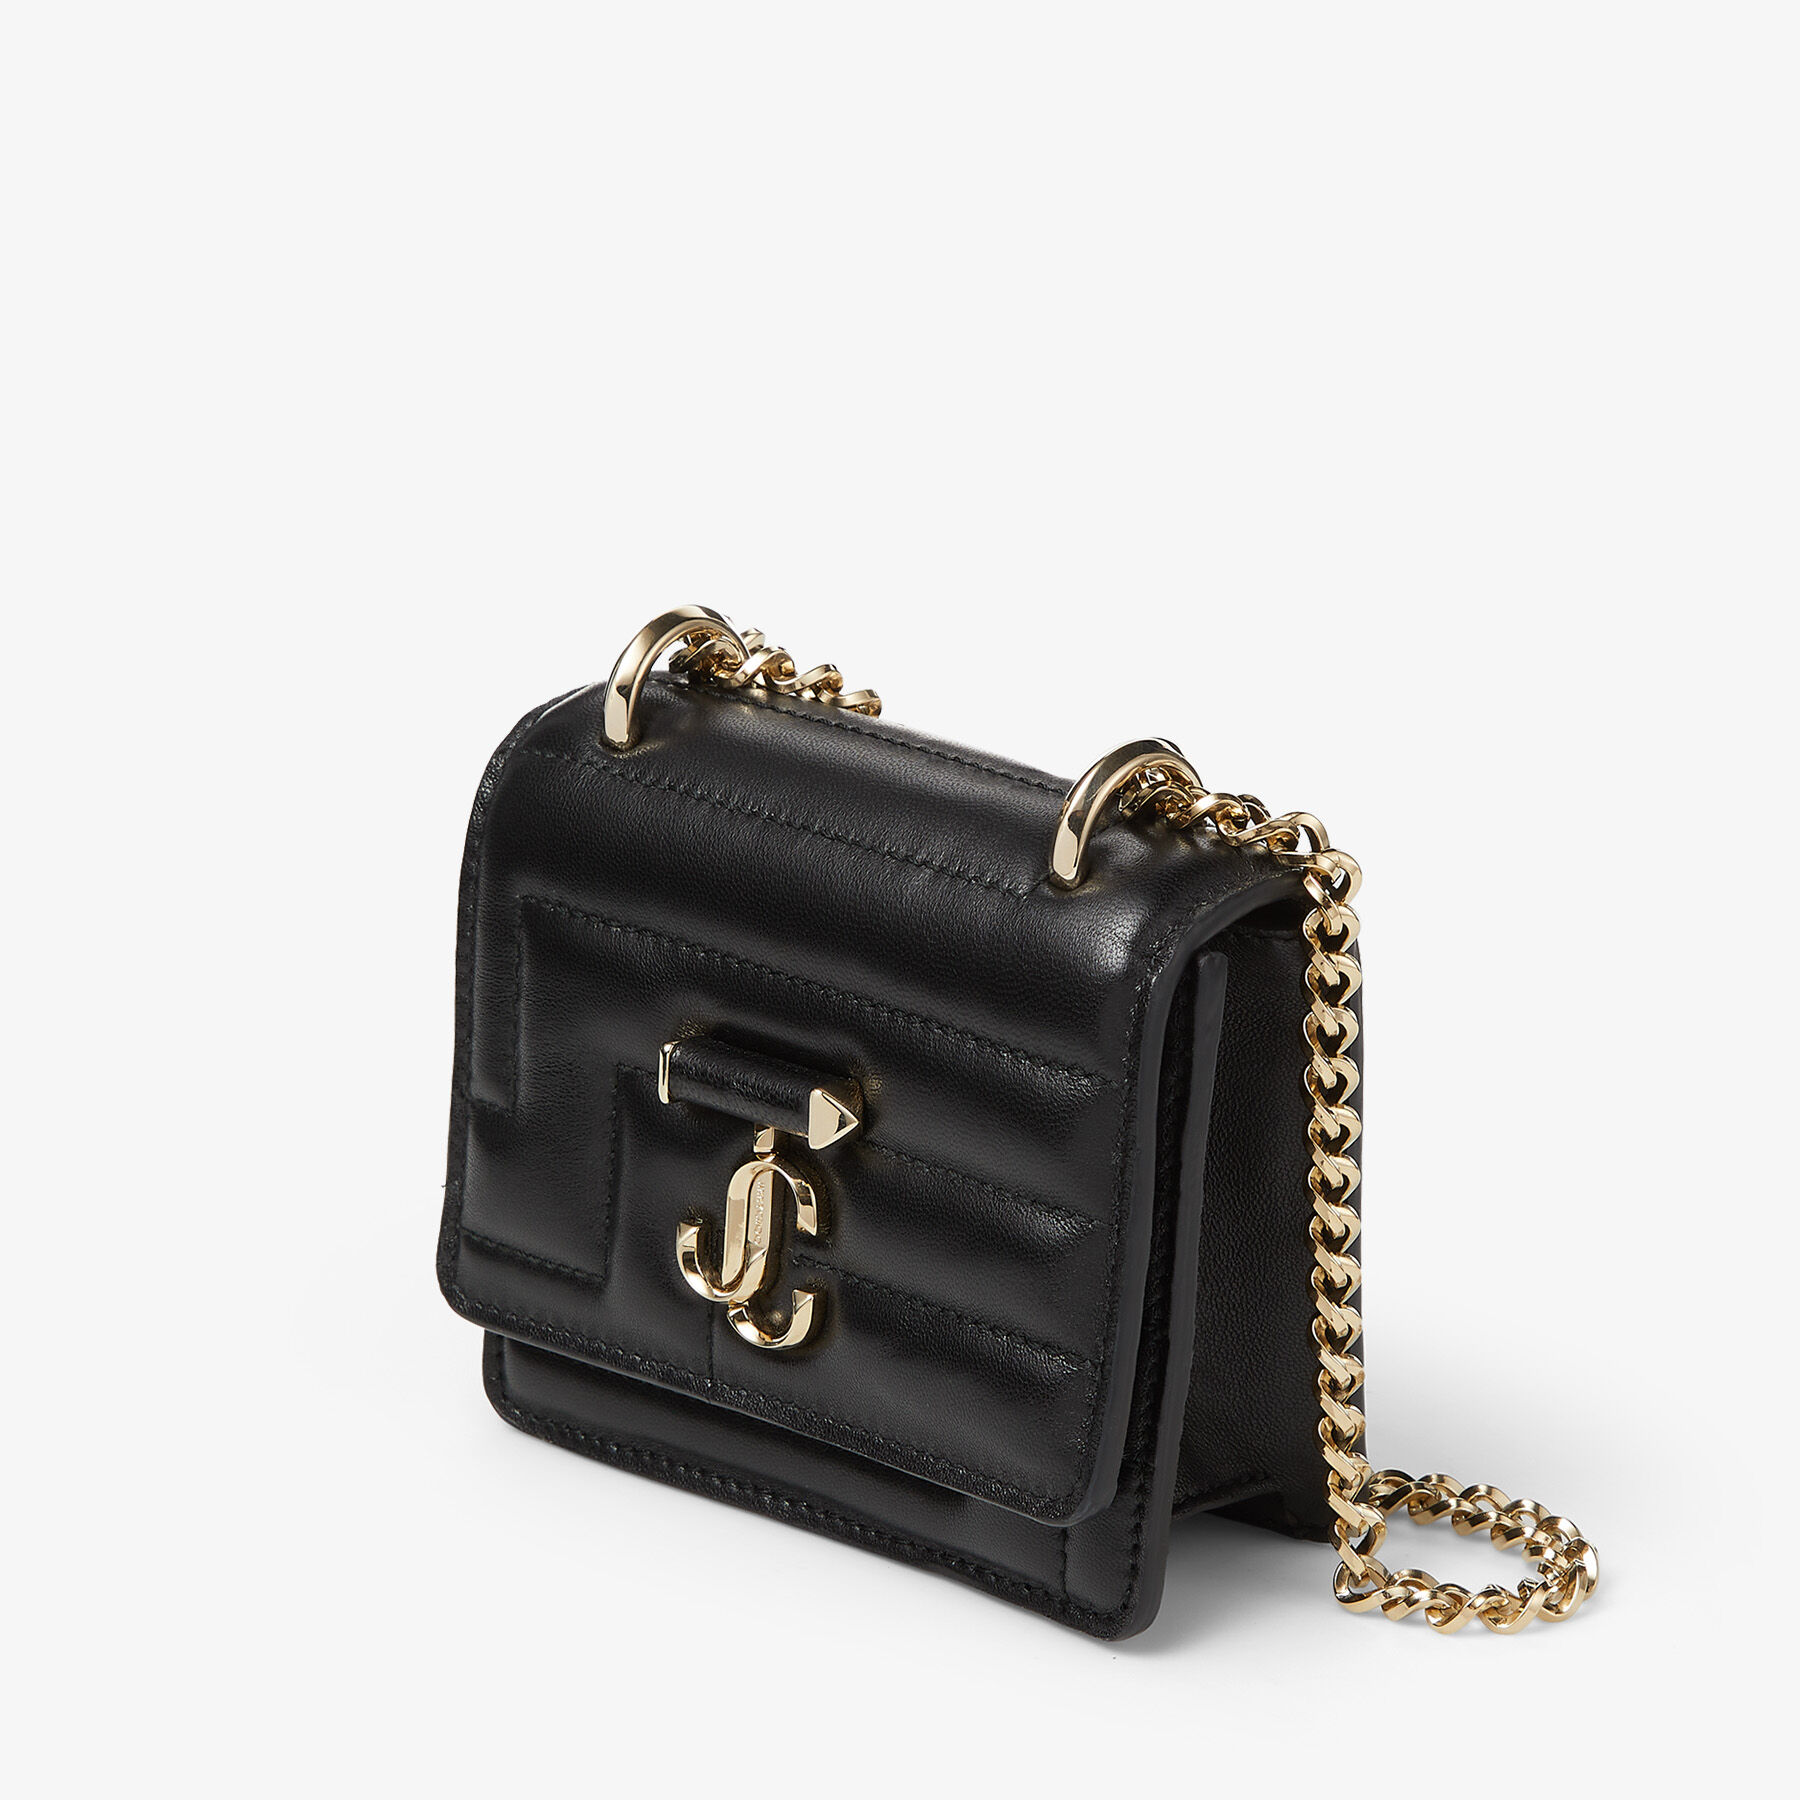 Black Avenue Nappa Leather Mini Bag, Autumn 2022 collection